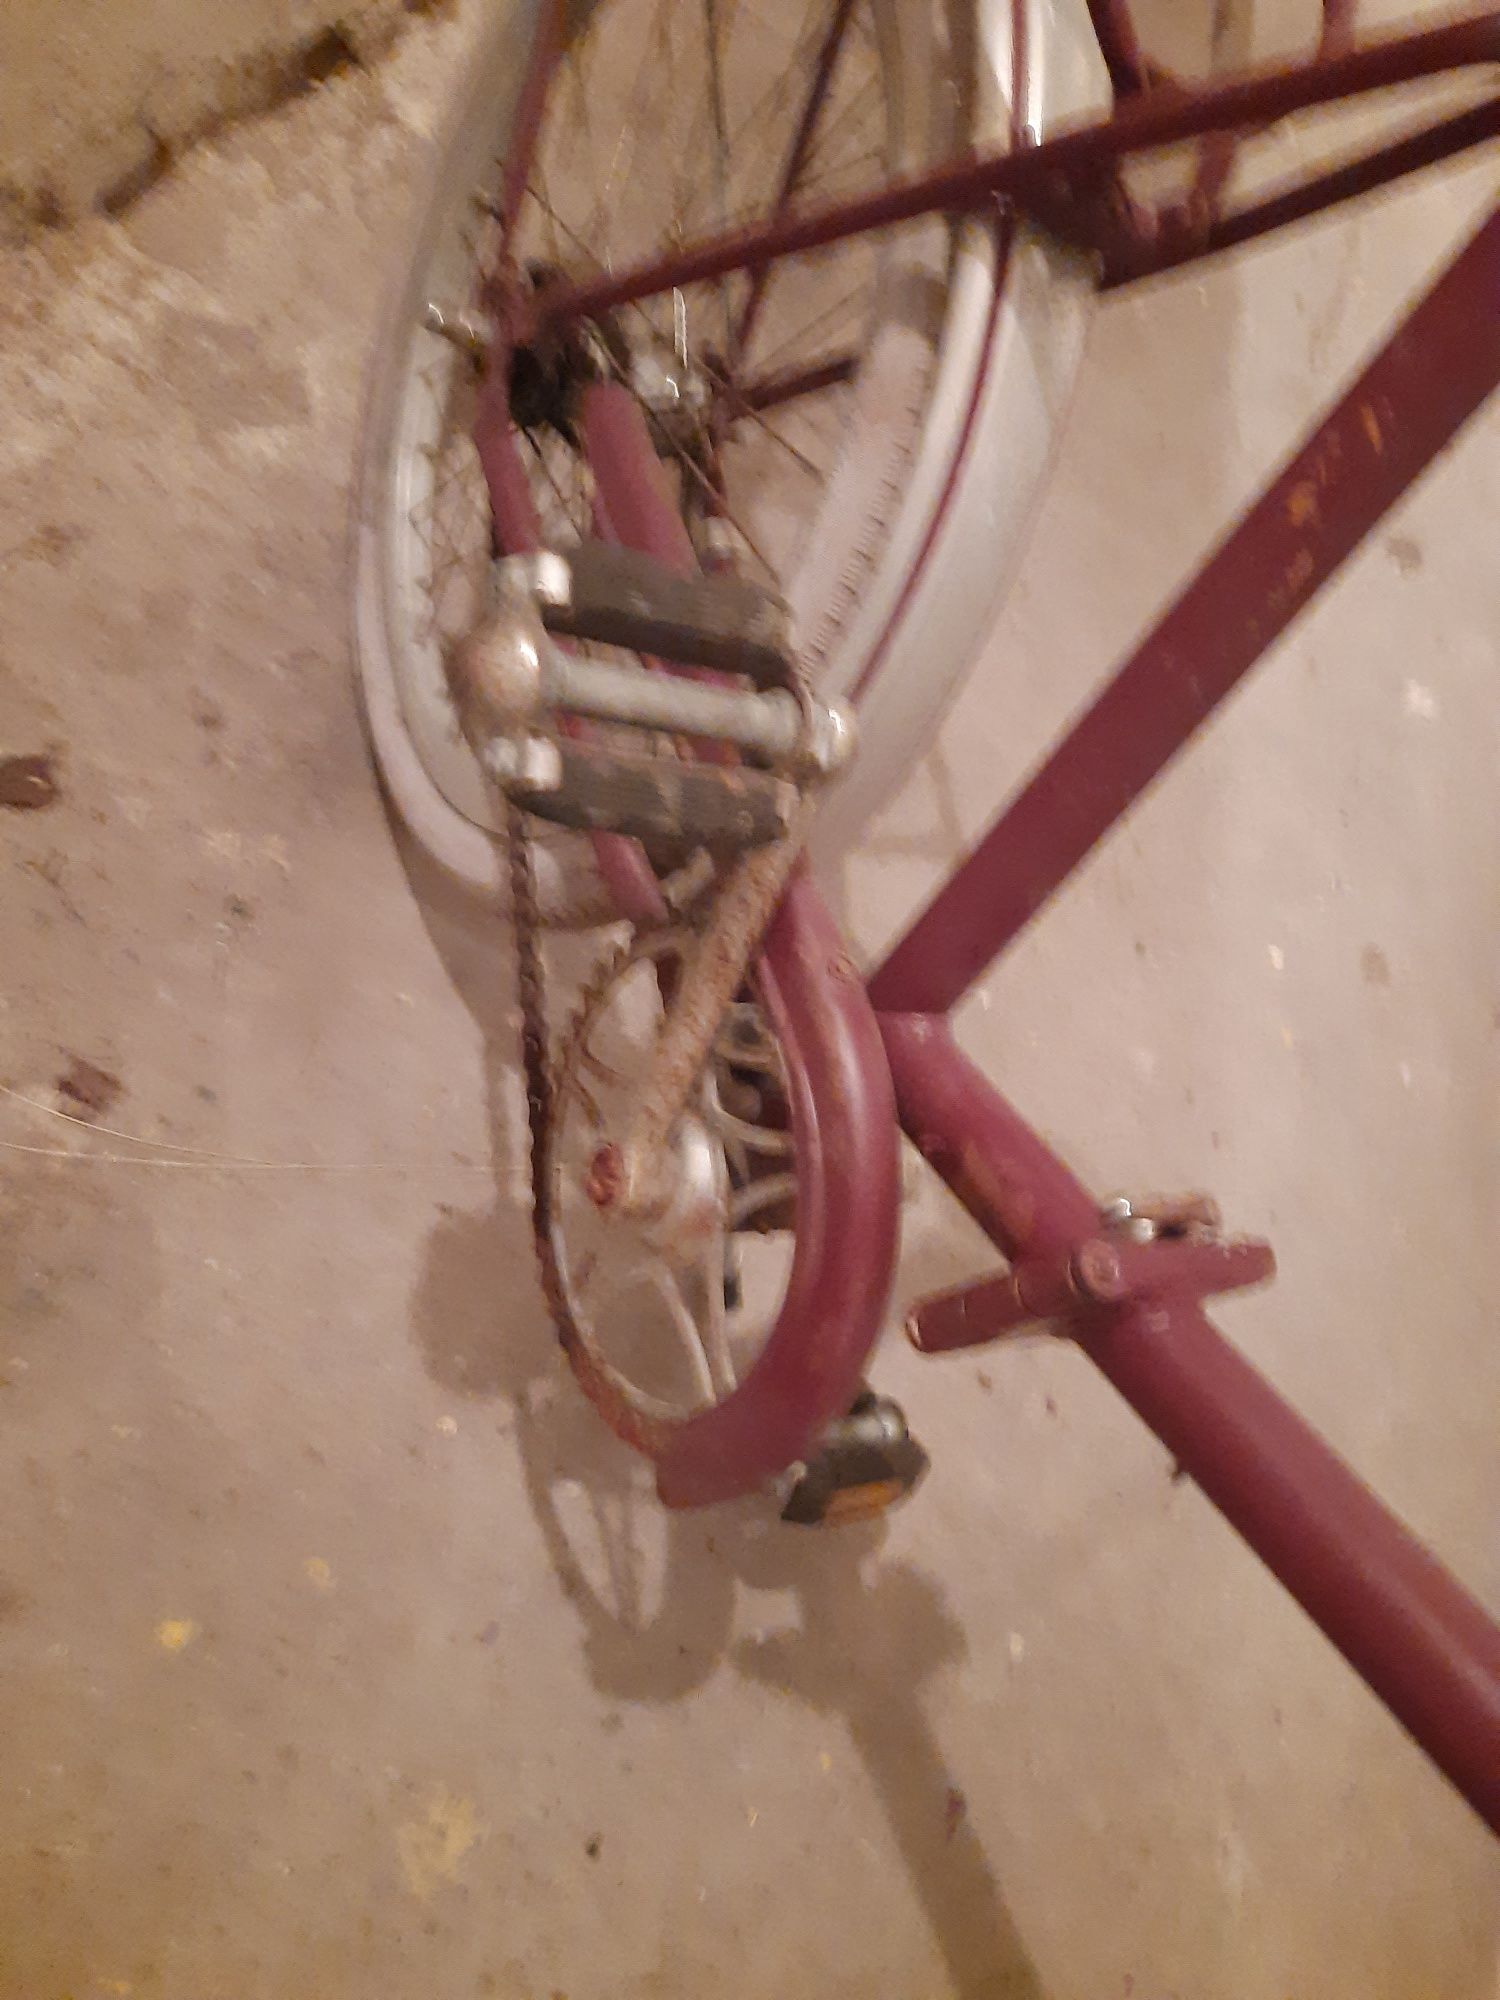 Stary rower skladak